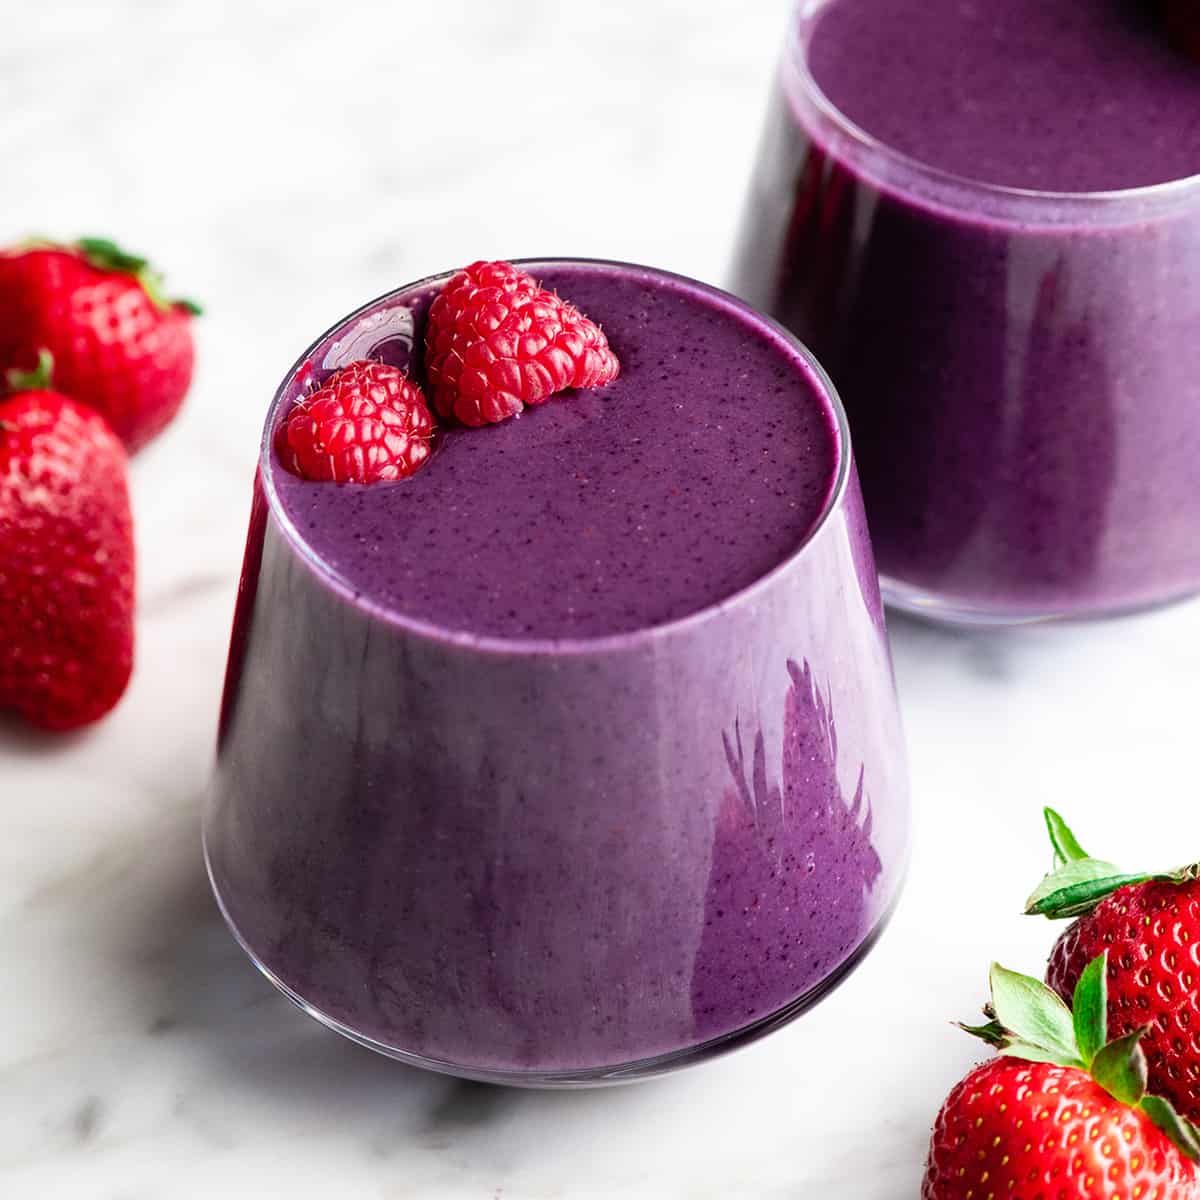 https://joyfoodsunshine.com/wp-content/uploads/2020/06/healthy-berry-smoothie-recipe-5.jpg